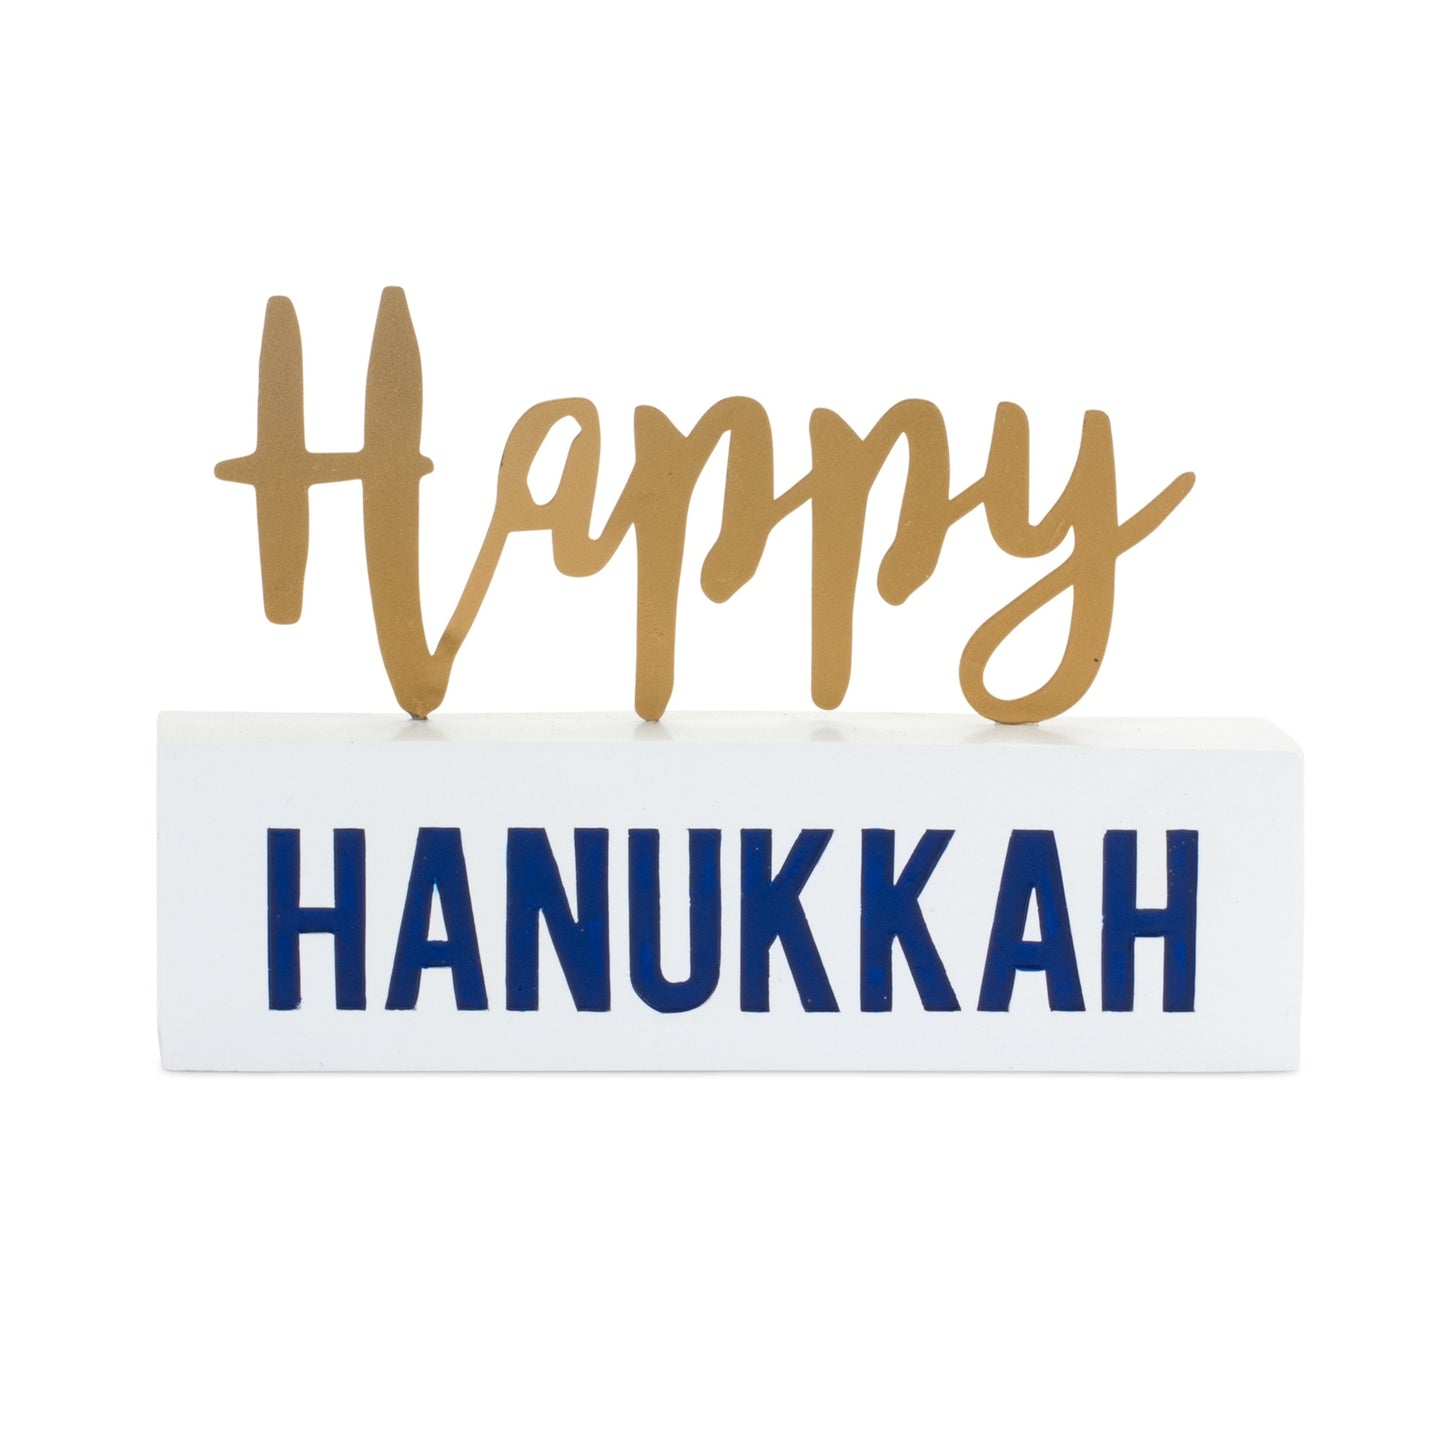 Hanukkah Holiday Tabletop Signs